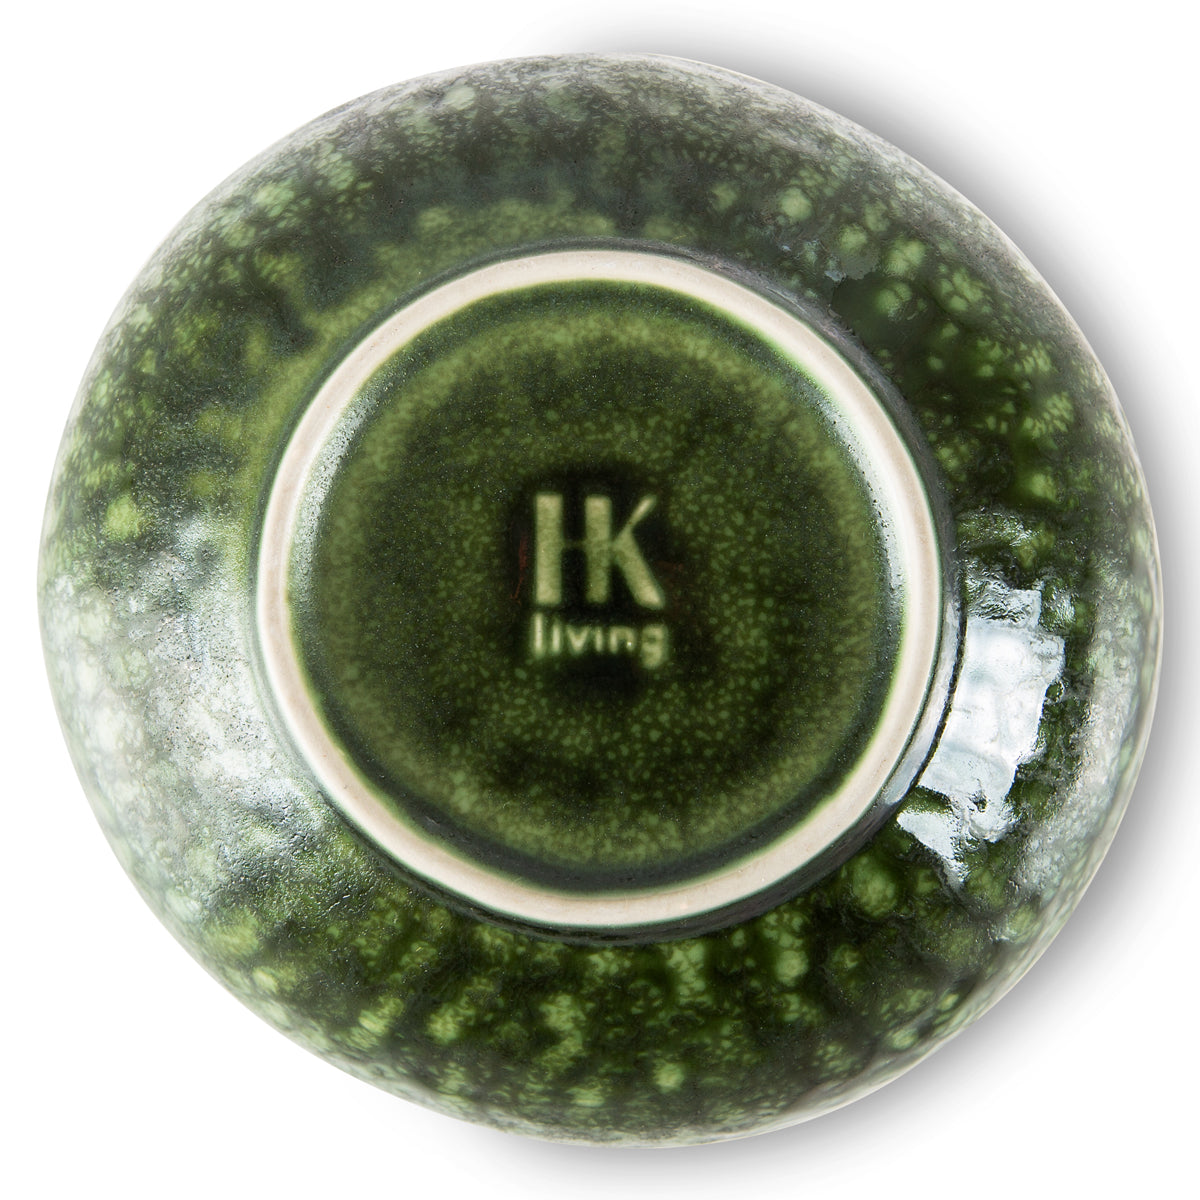 The Emeralds Ceramic Bowl Organic Green (Set of 2)